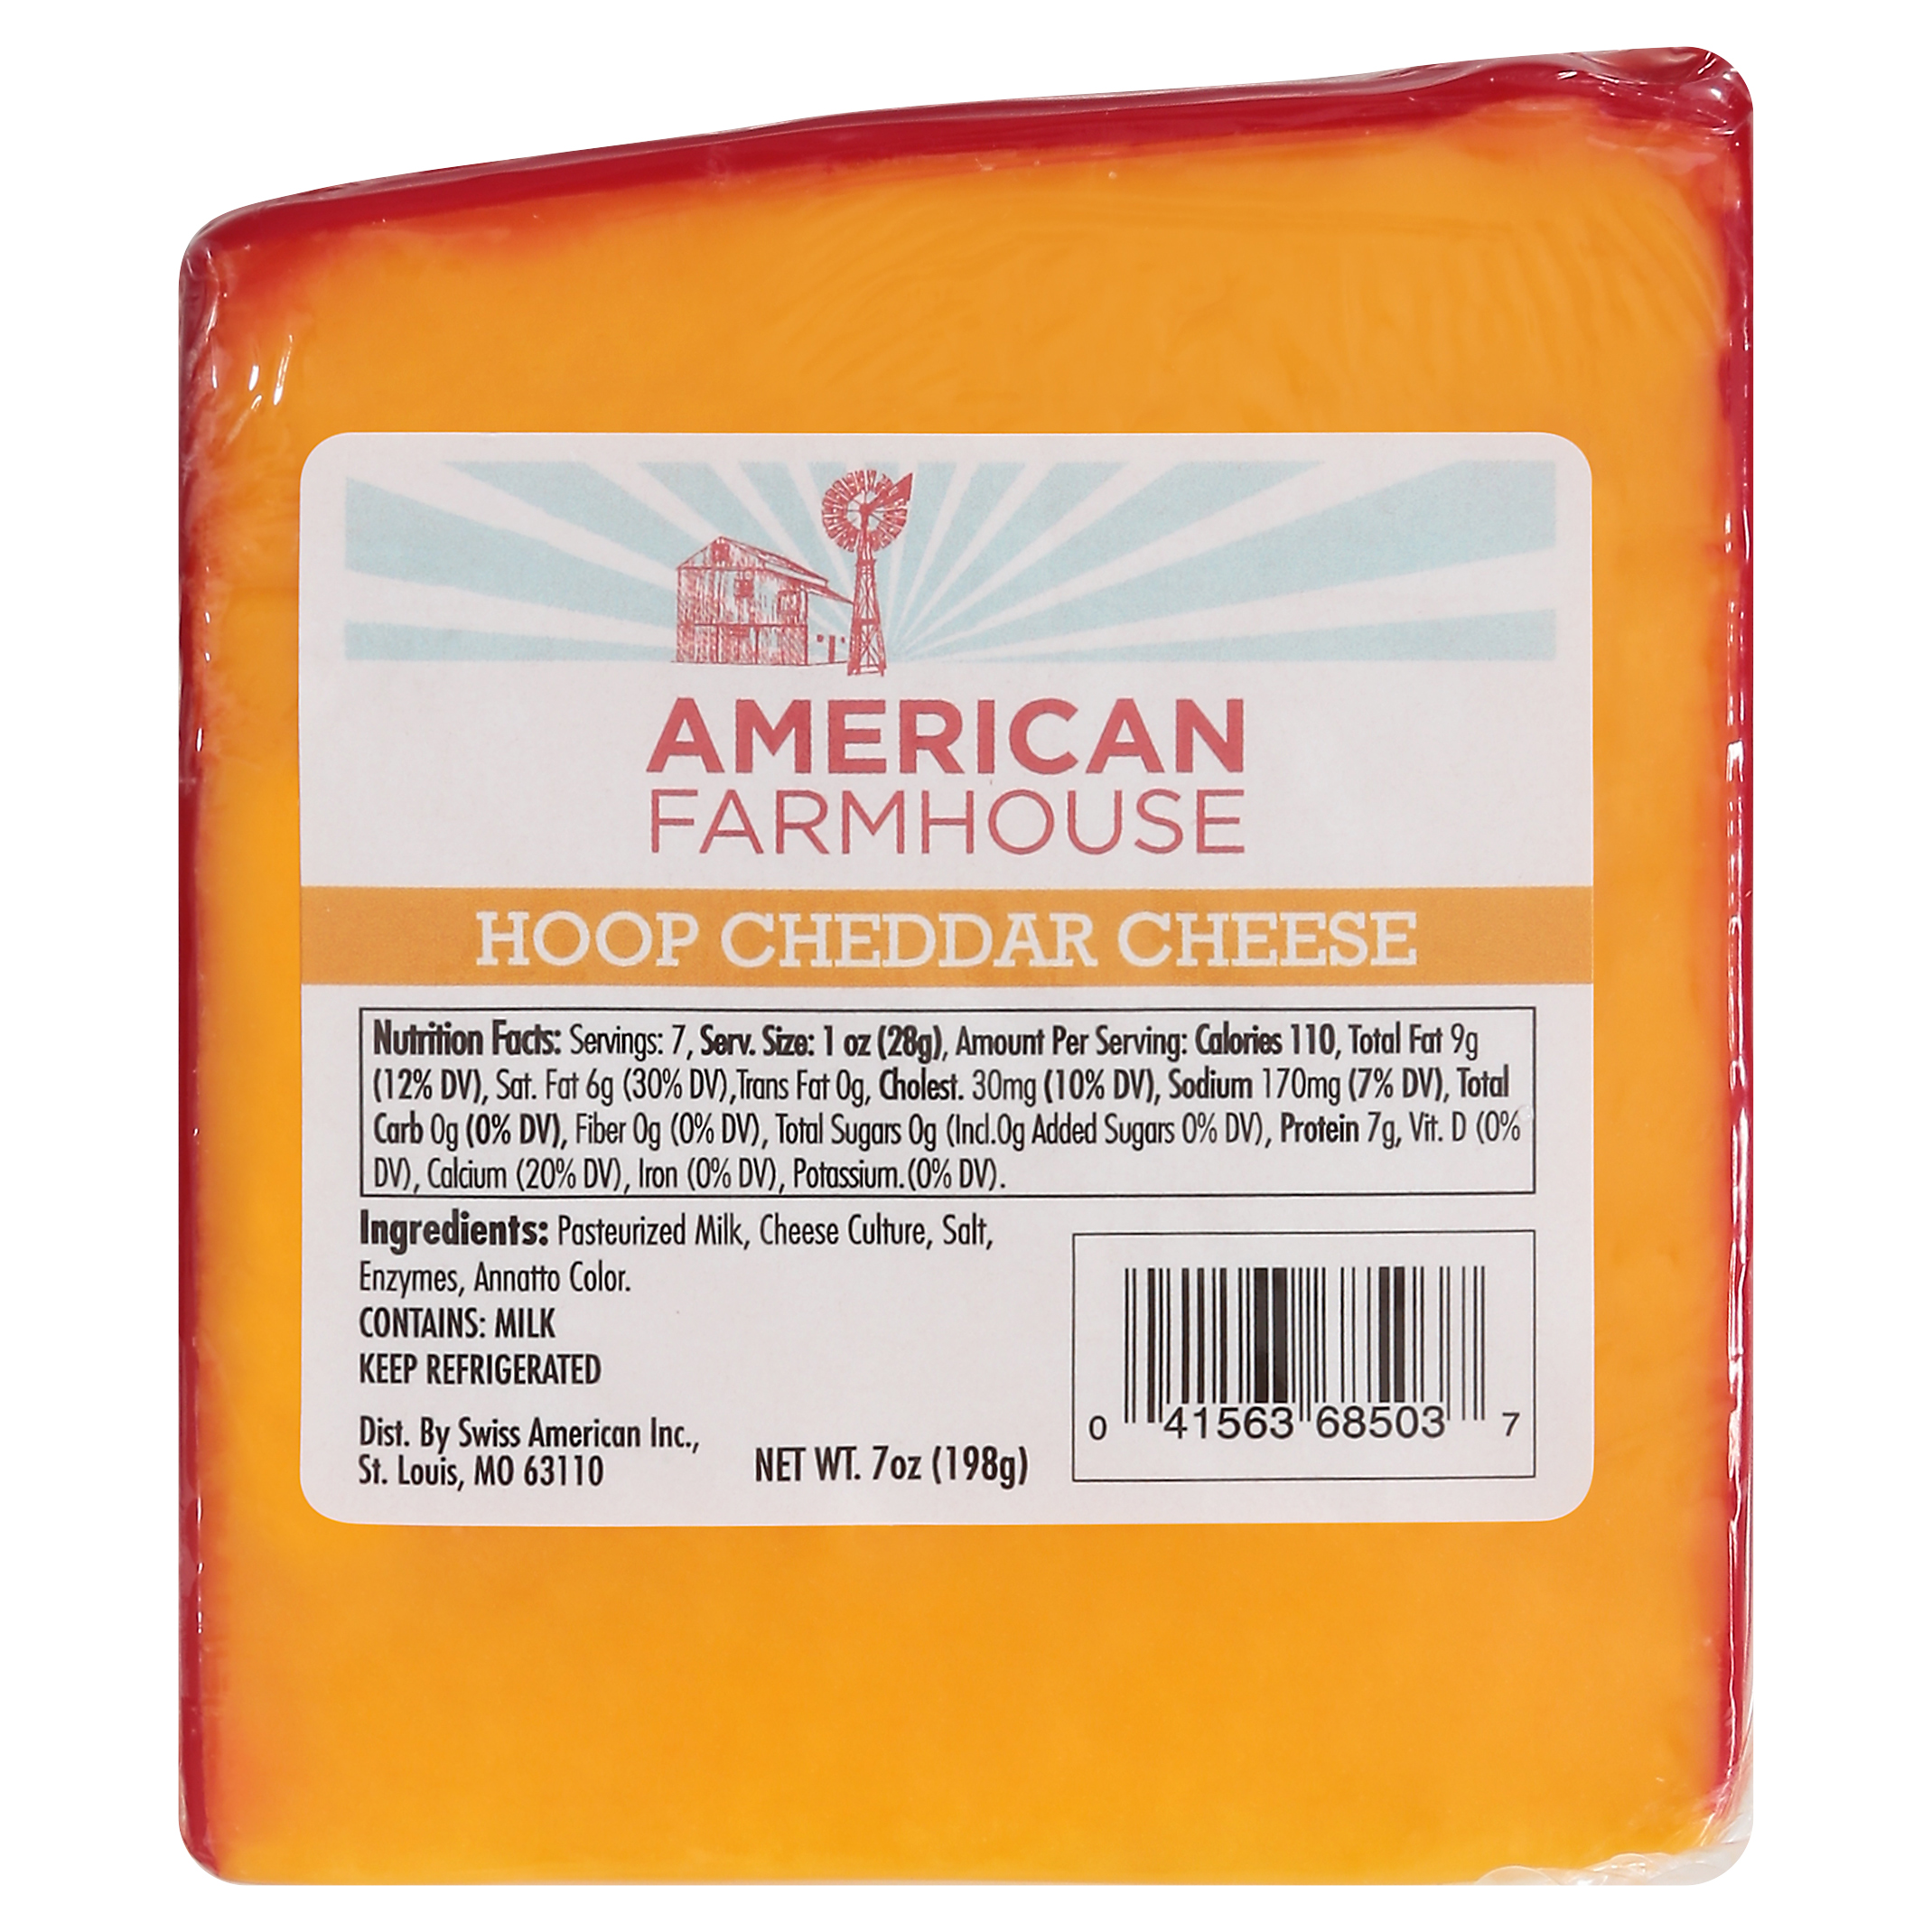 American Farmhouse Hoop Cheddar Cheese 7 Oz image